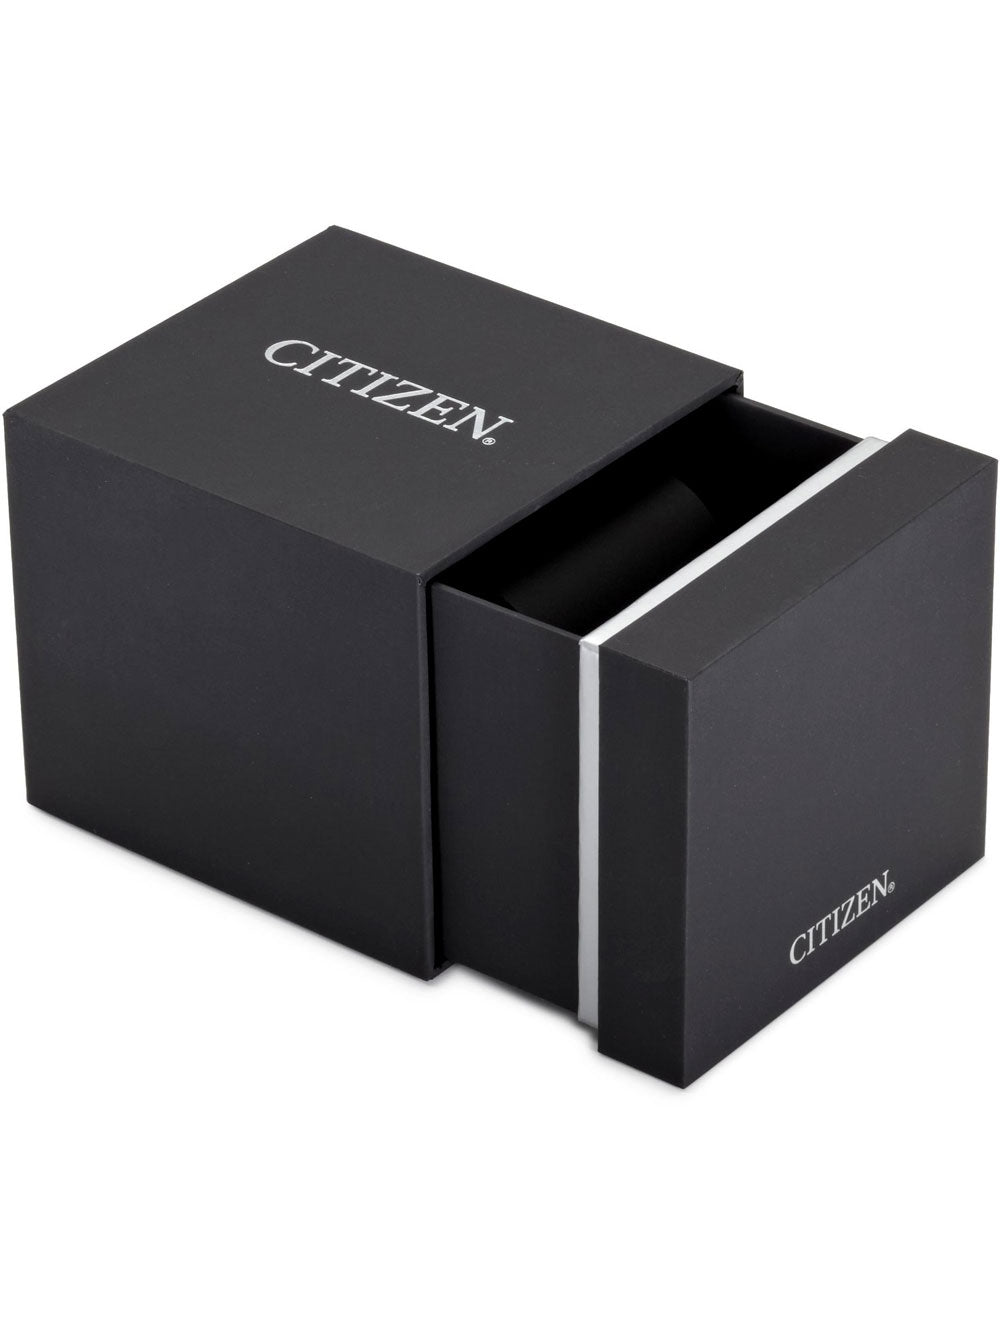 Citizen AN3625-58E Quartz Chronograph 43mm 10ATM